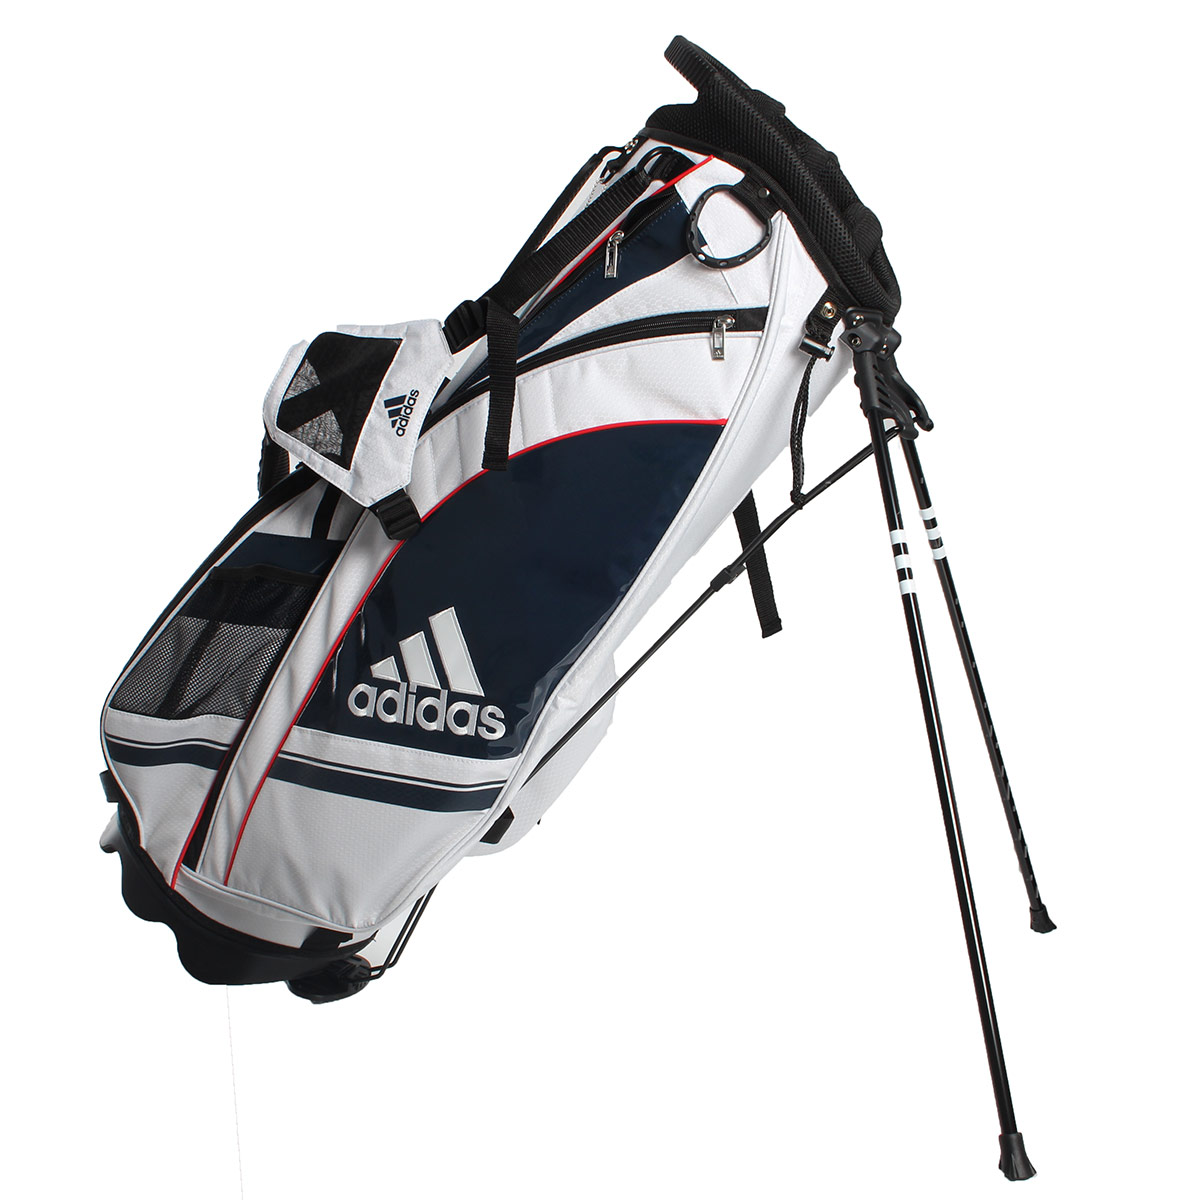 adidas travel golf bag